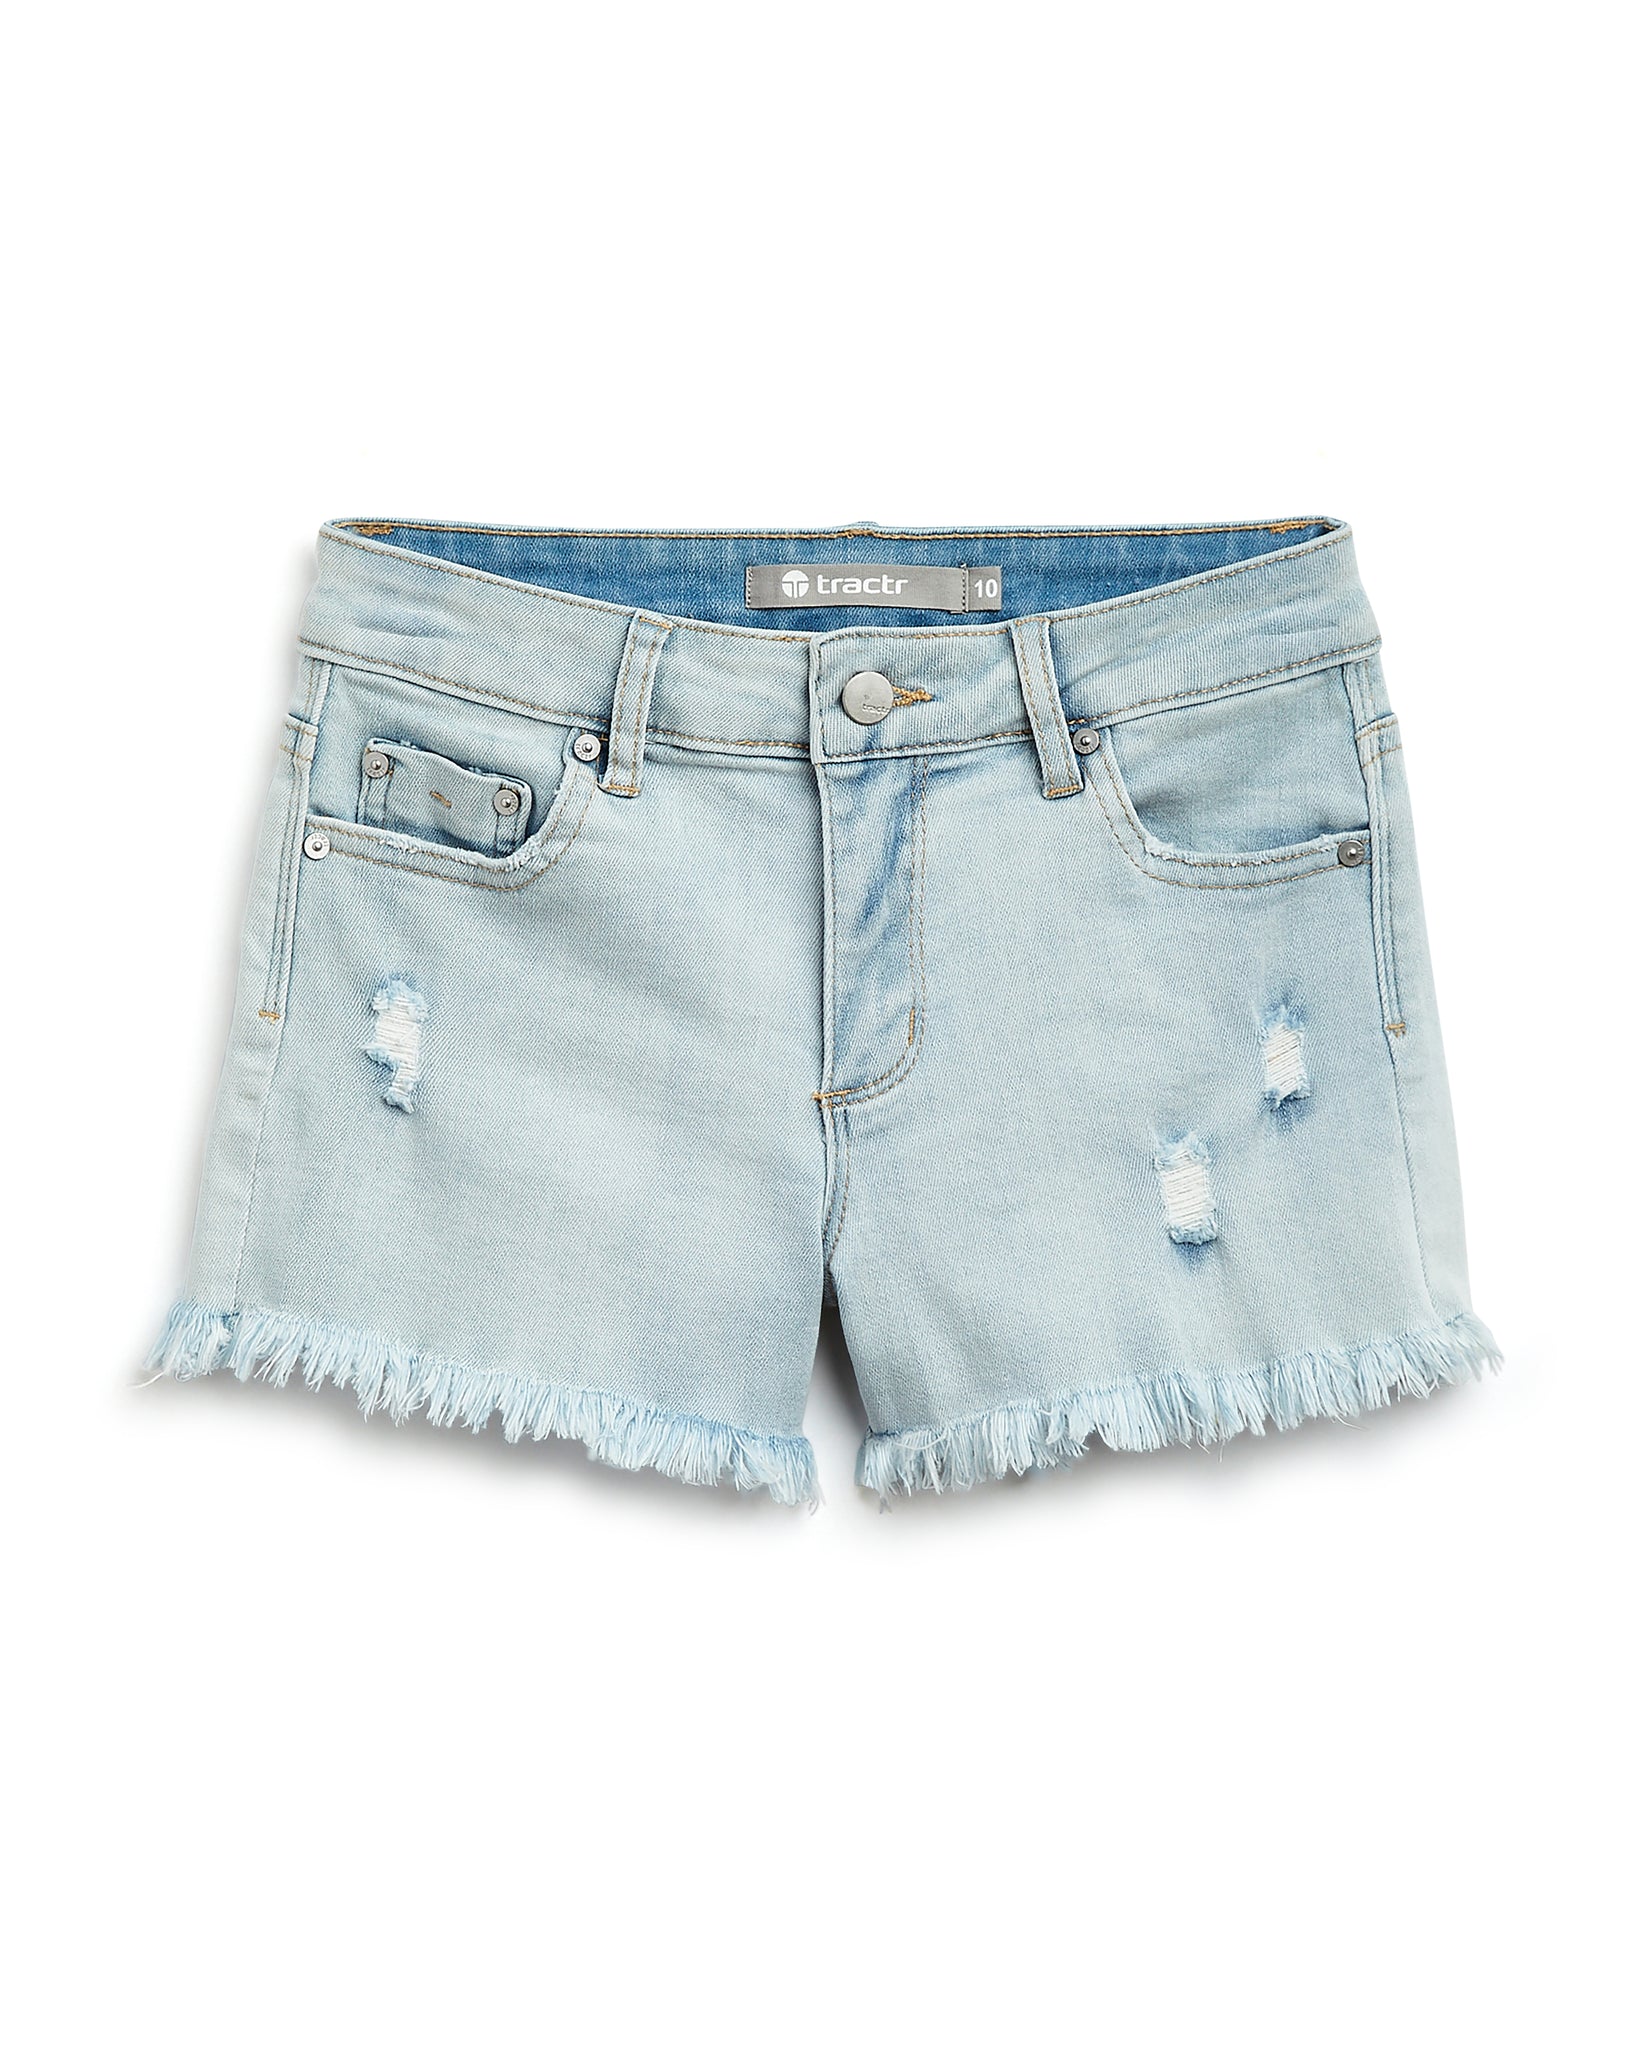 Brittany Pocket Fray Shorts Indigo 22450-D-J9EN